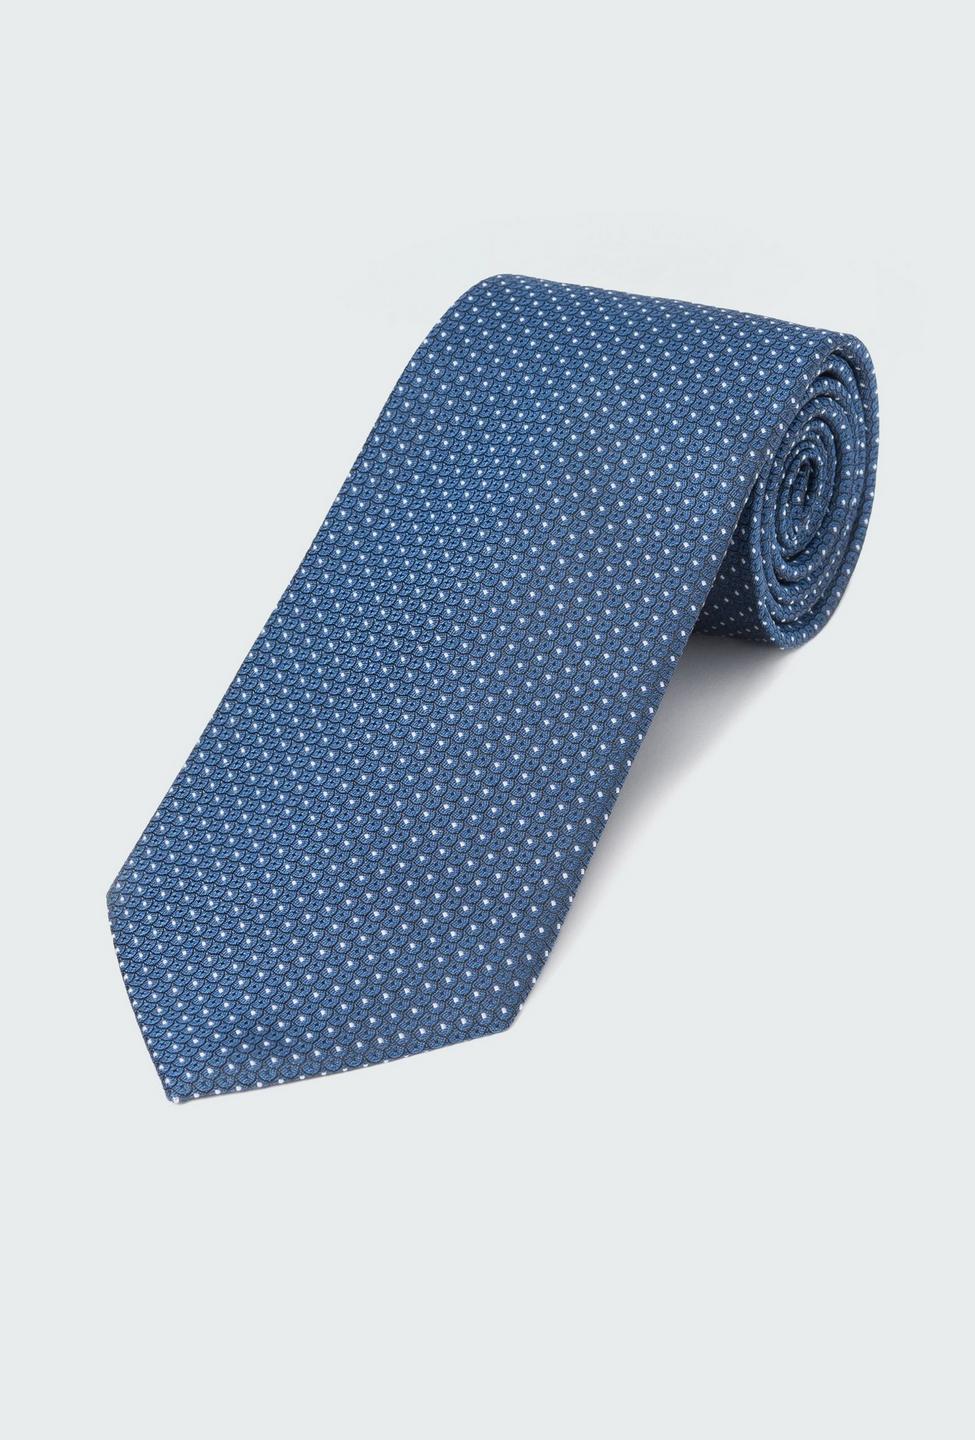 Blue tie - Pattern Design from Premium Indochino Collection